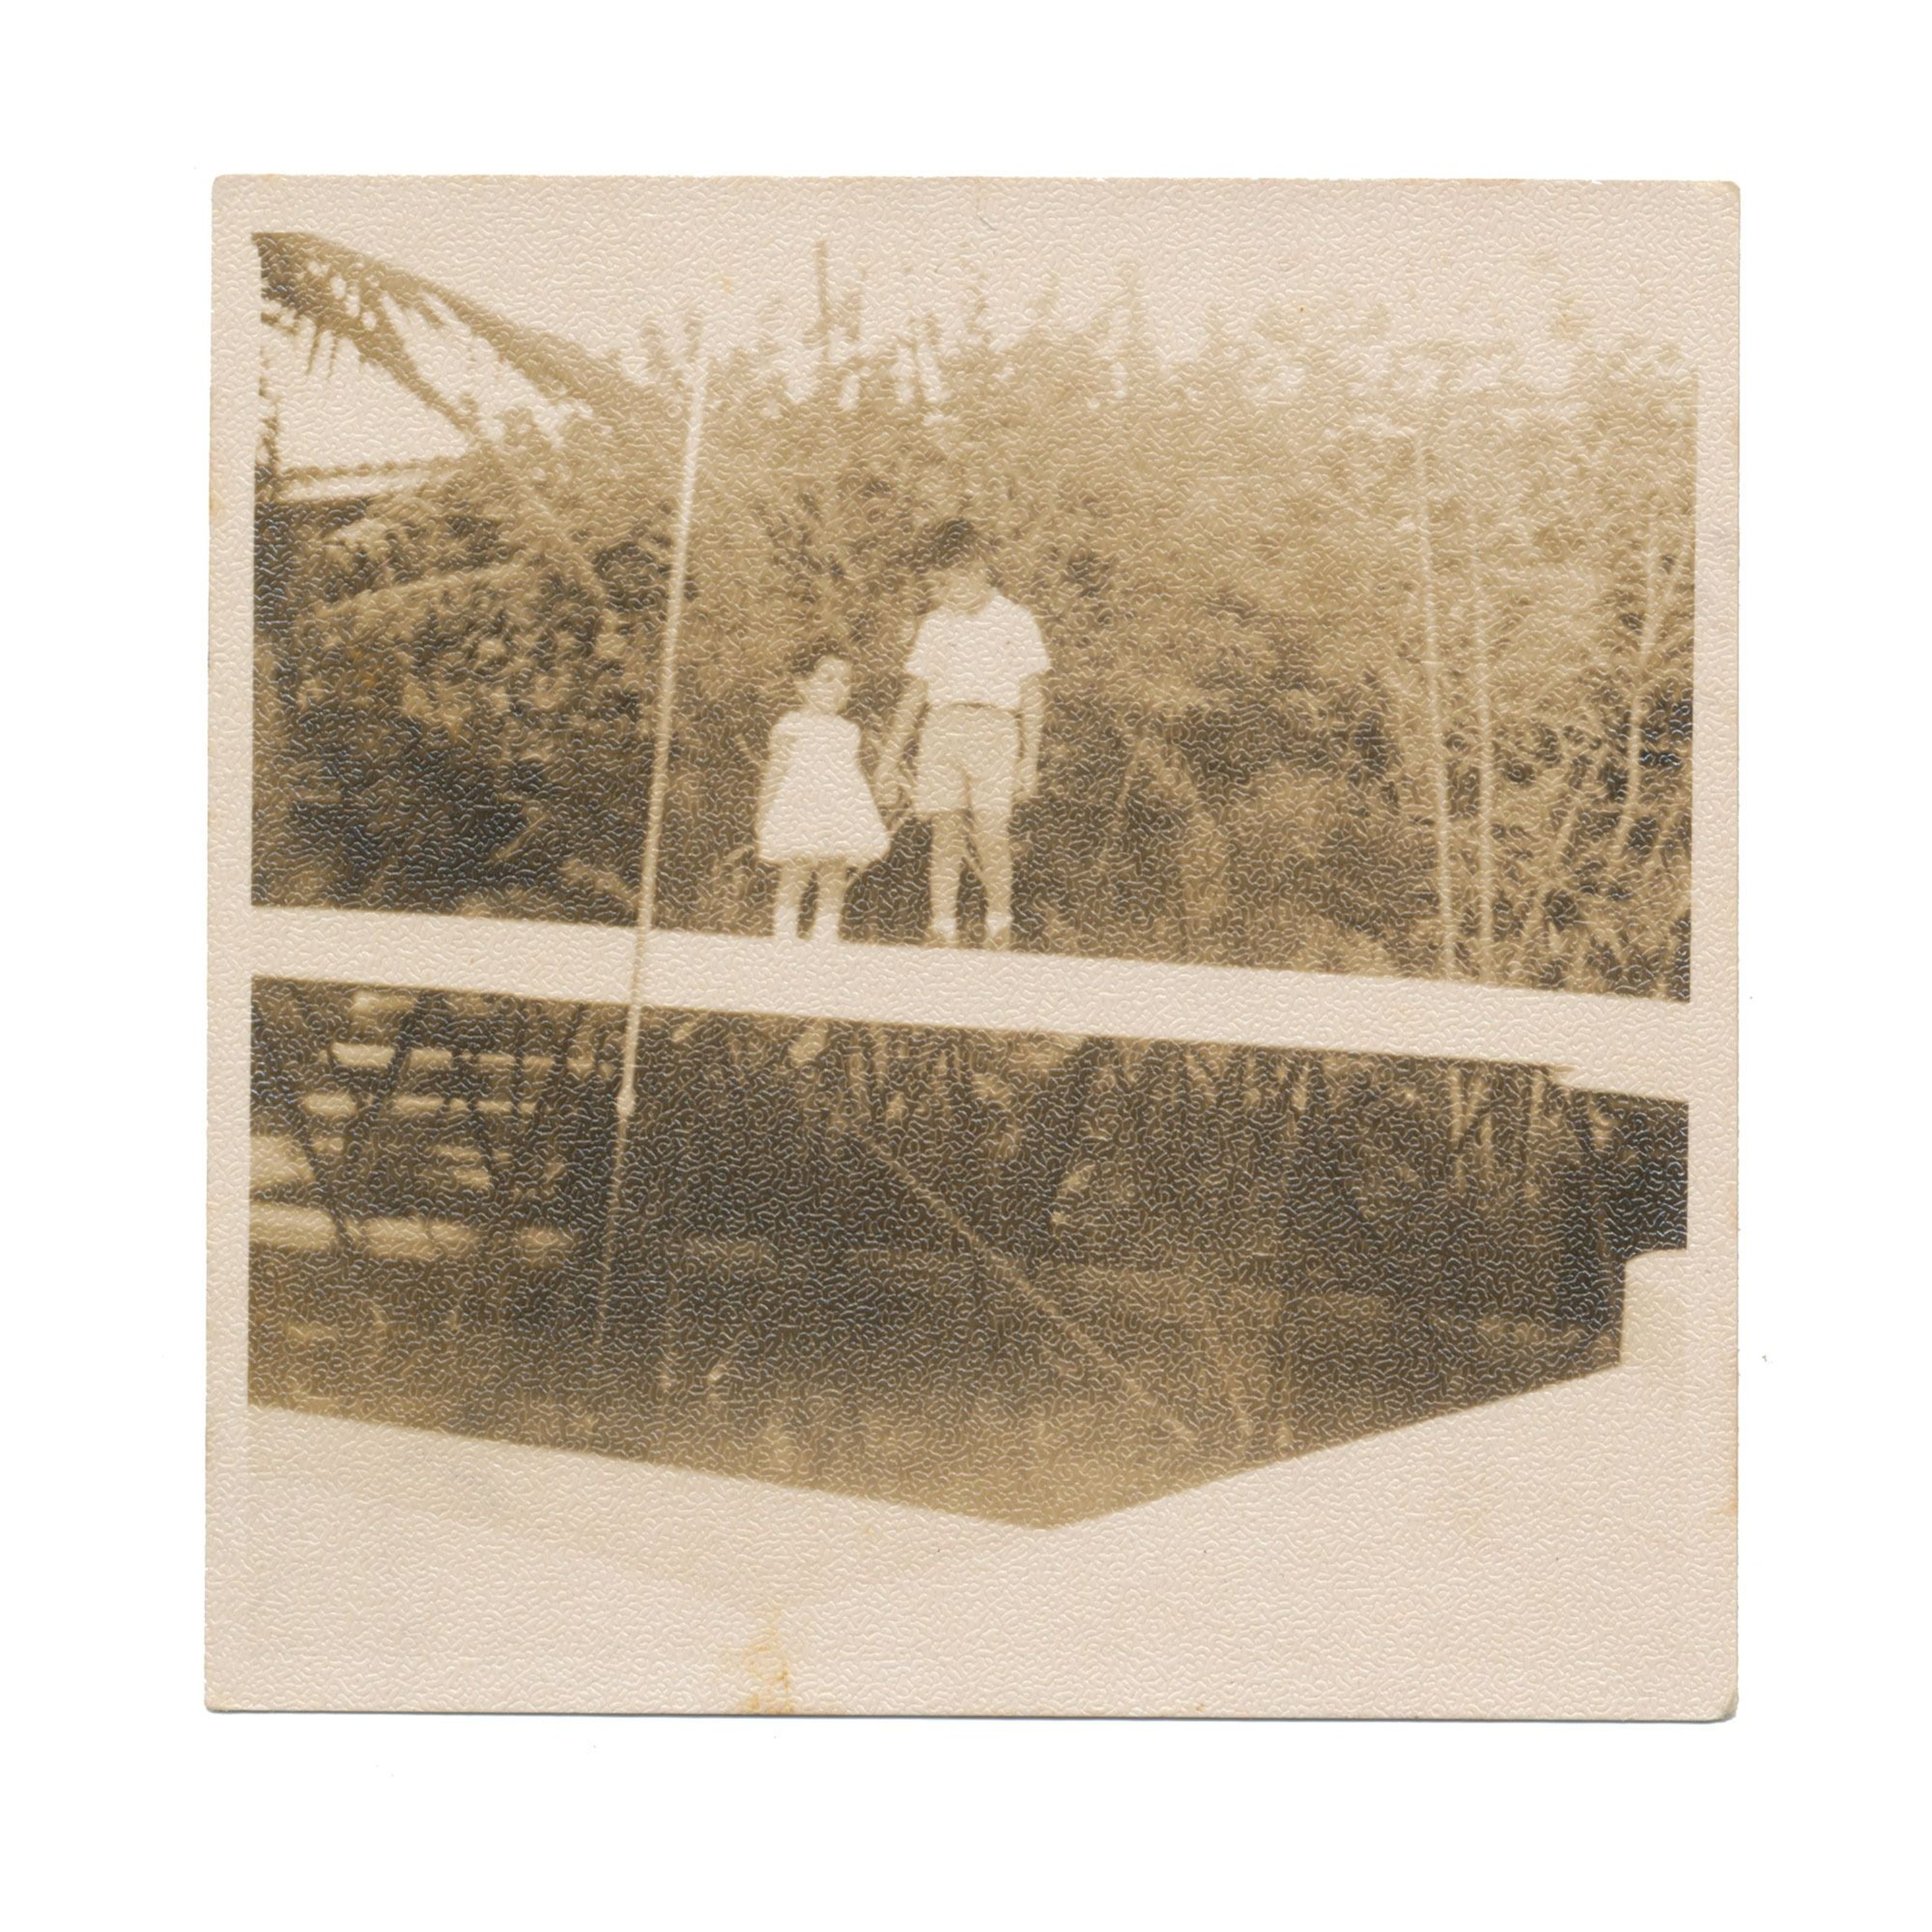 two little kids standing on a bridge